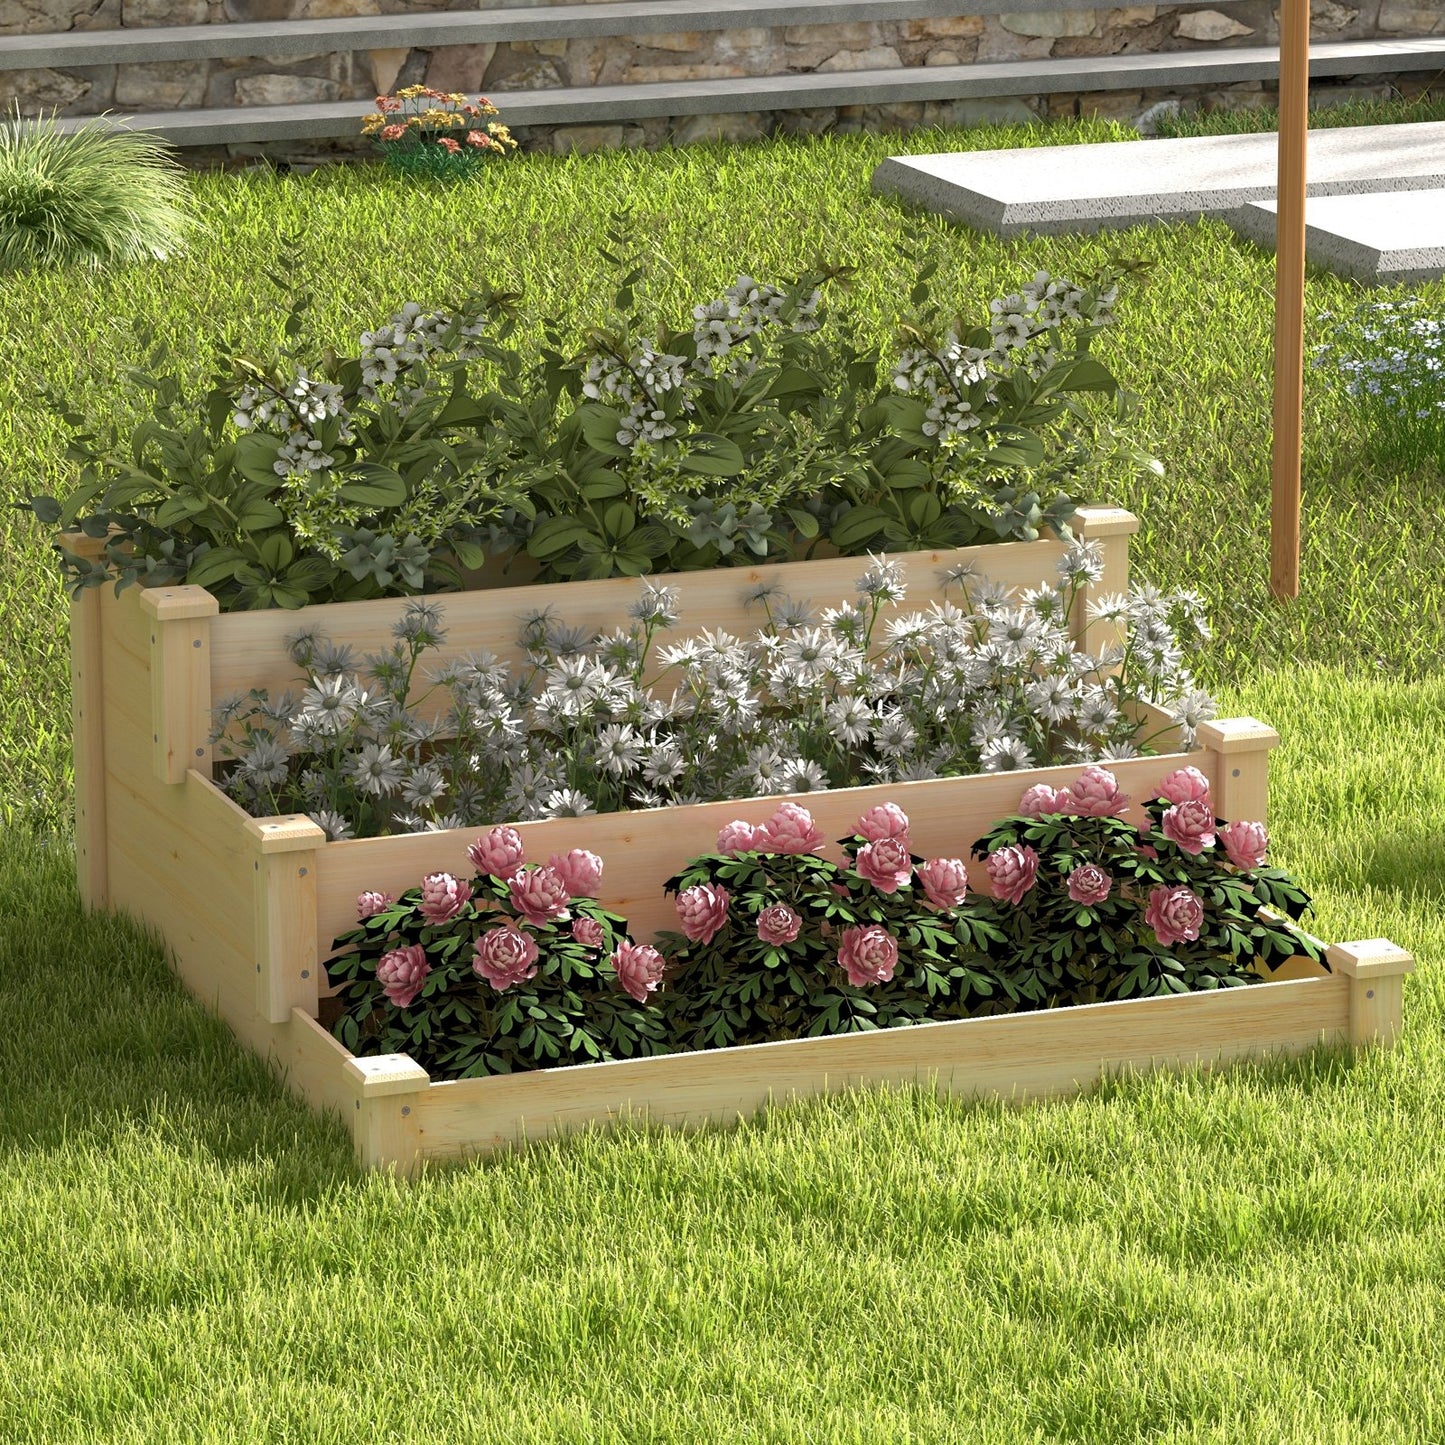 3-Tier Wooden Raised Garden Bed for Backyard Patio Gardening, Natural